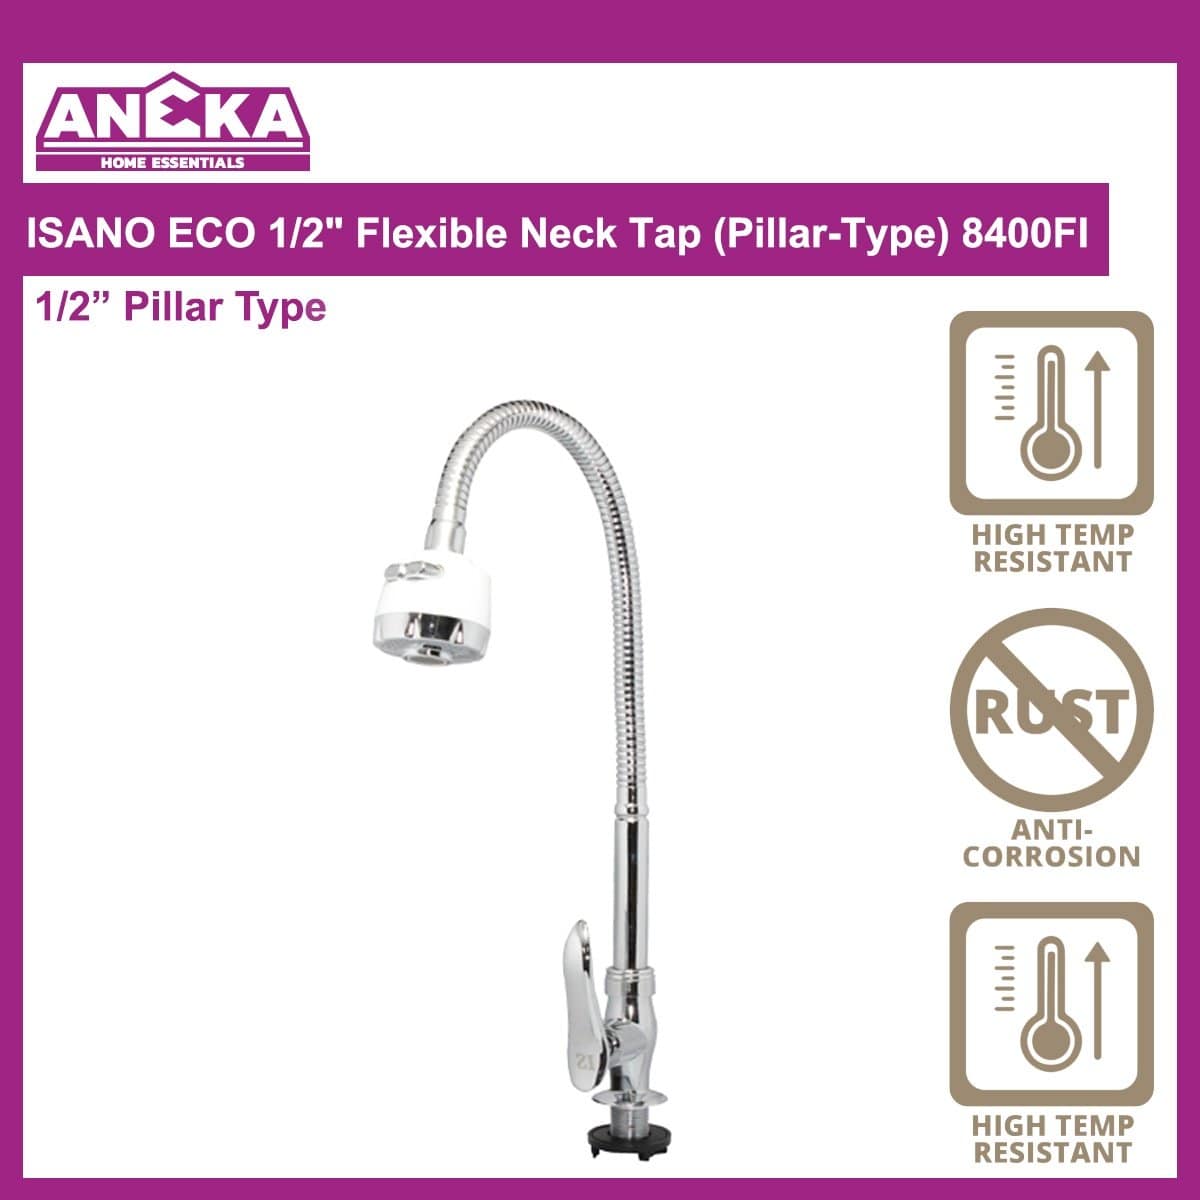 ISANO ECO 1/2" Flexible Neck Tap (Pillar-Type) 8400FI